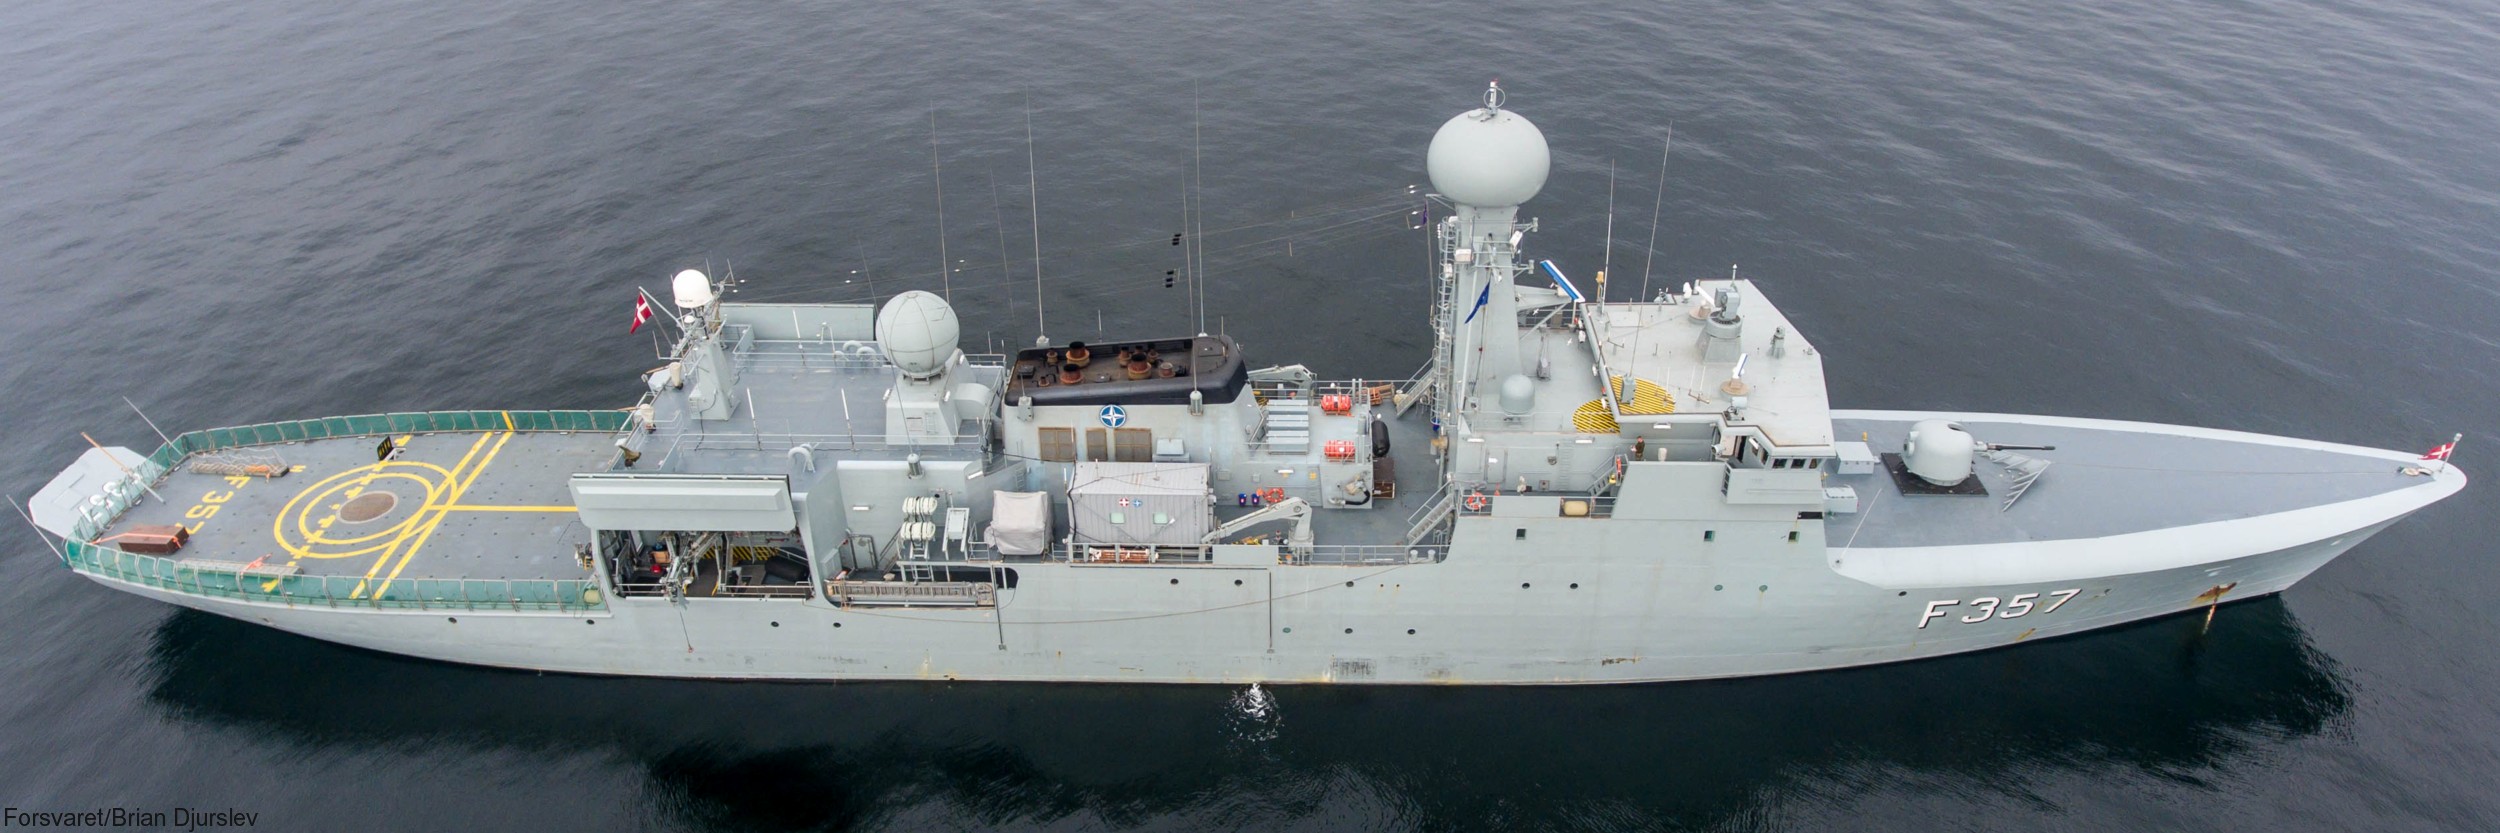 f-357 hdms thetis ocean patrol frigate royal danish navy kongelige danske marine inspektionsskibet 09